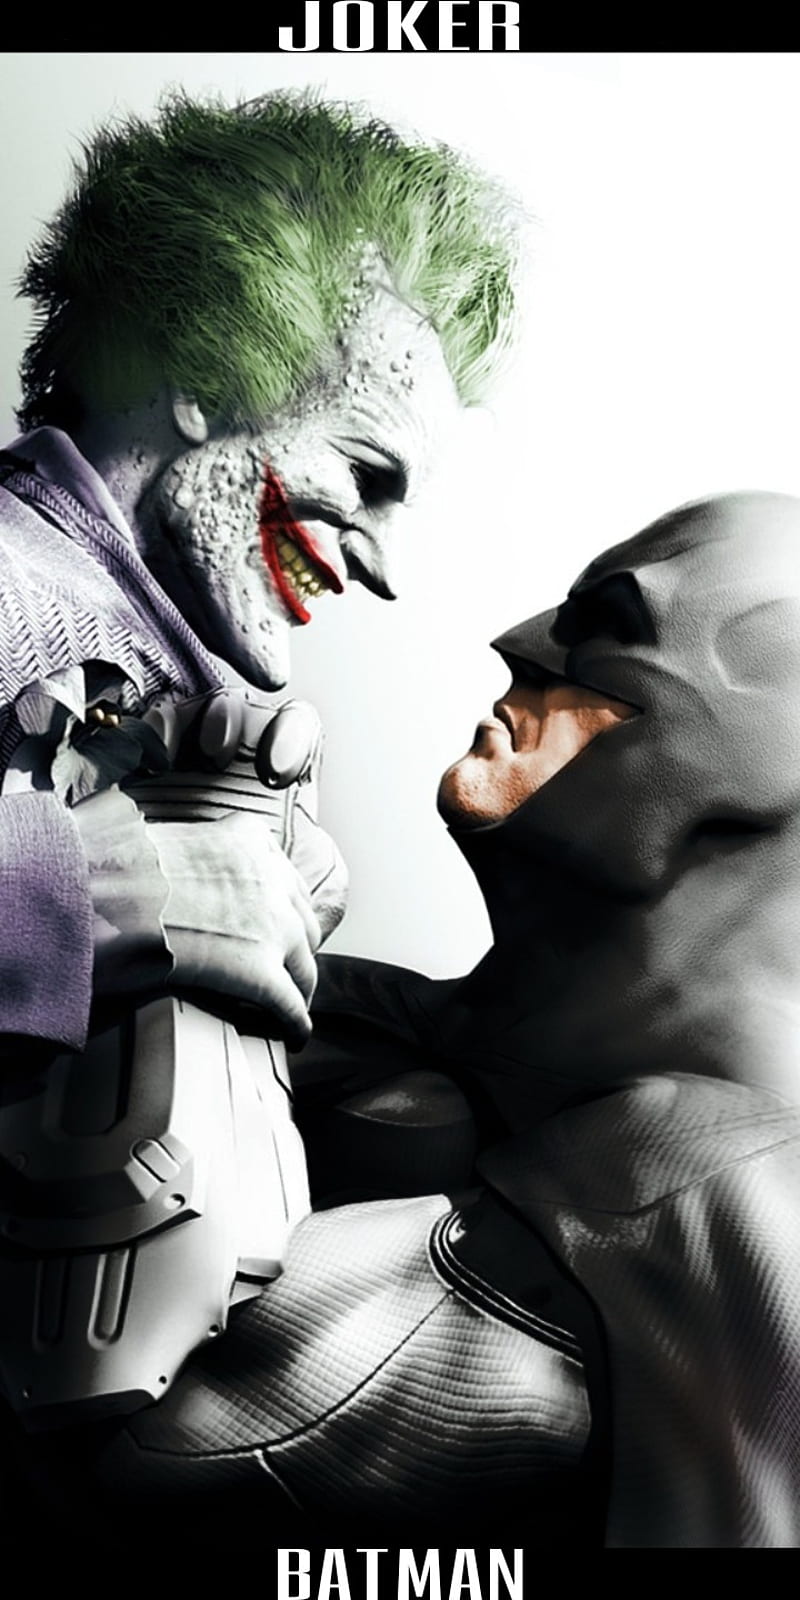 batman and joker arkham city